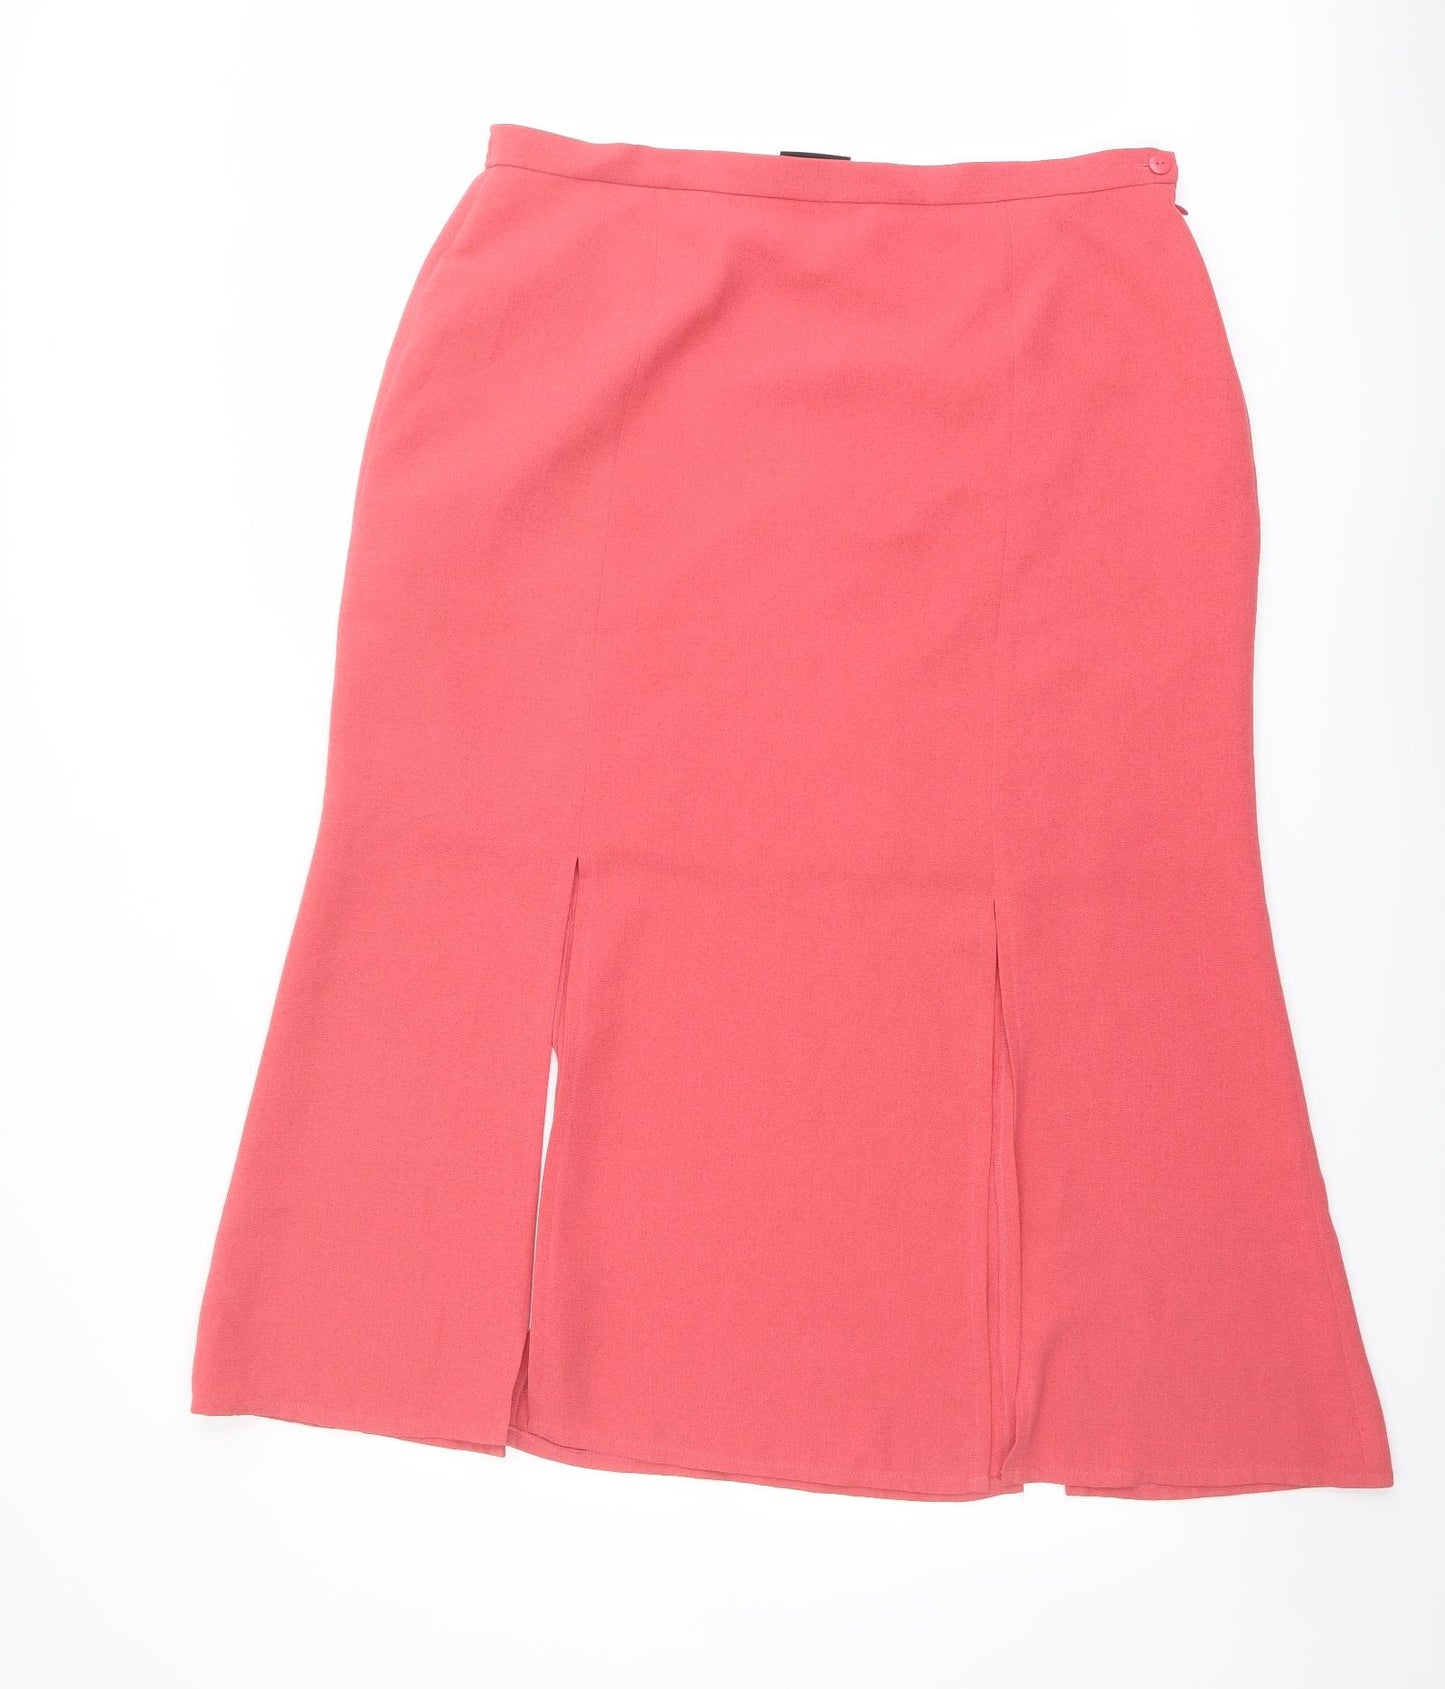 Jacques Vert Womens Pink Polyester A-Line Skirt Size 20 Zip